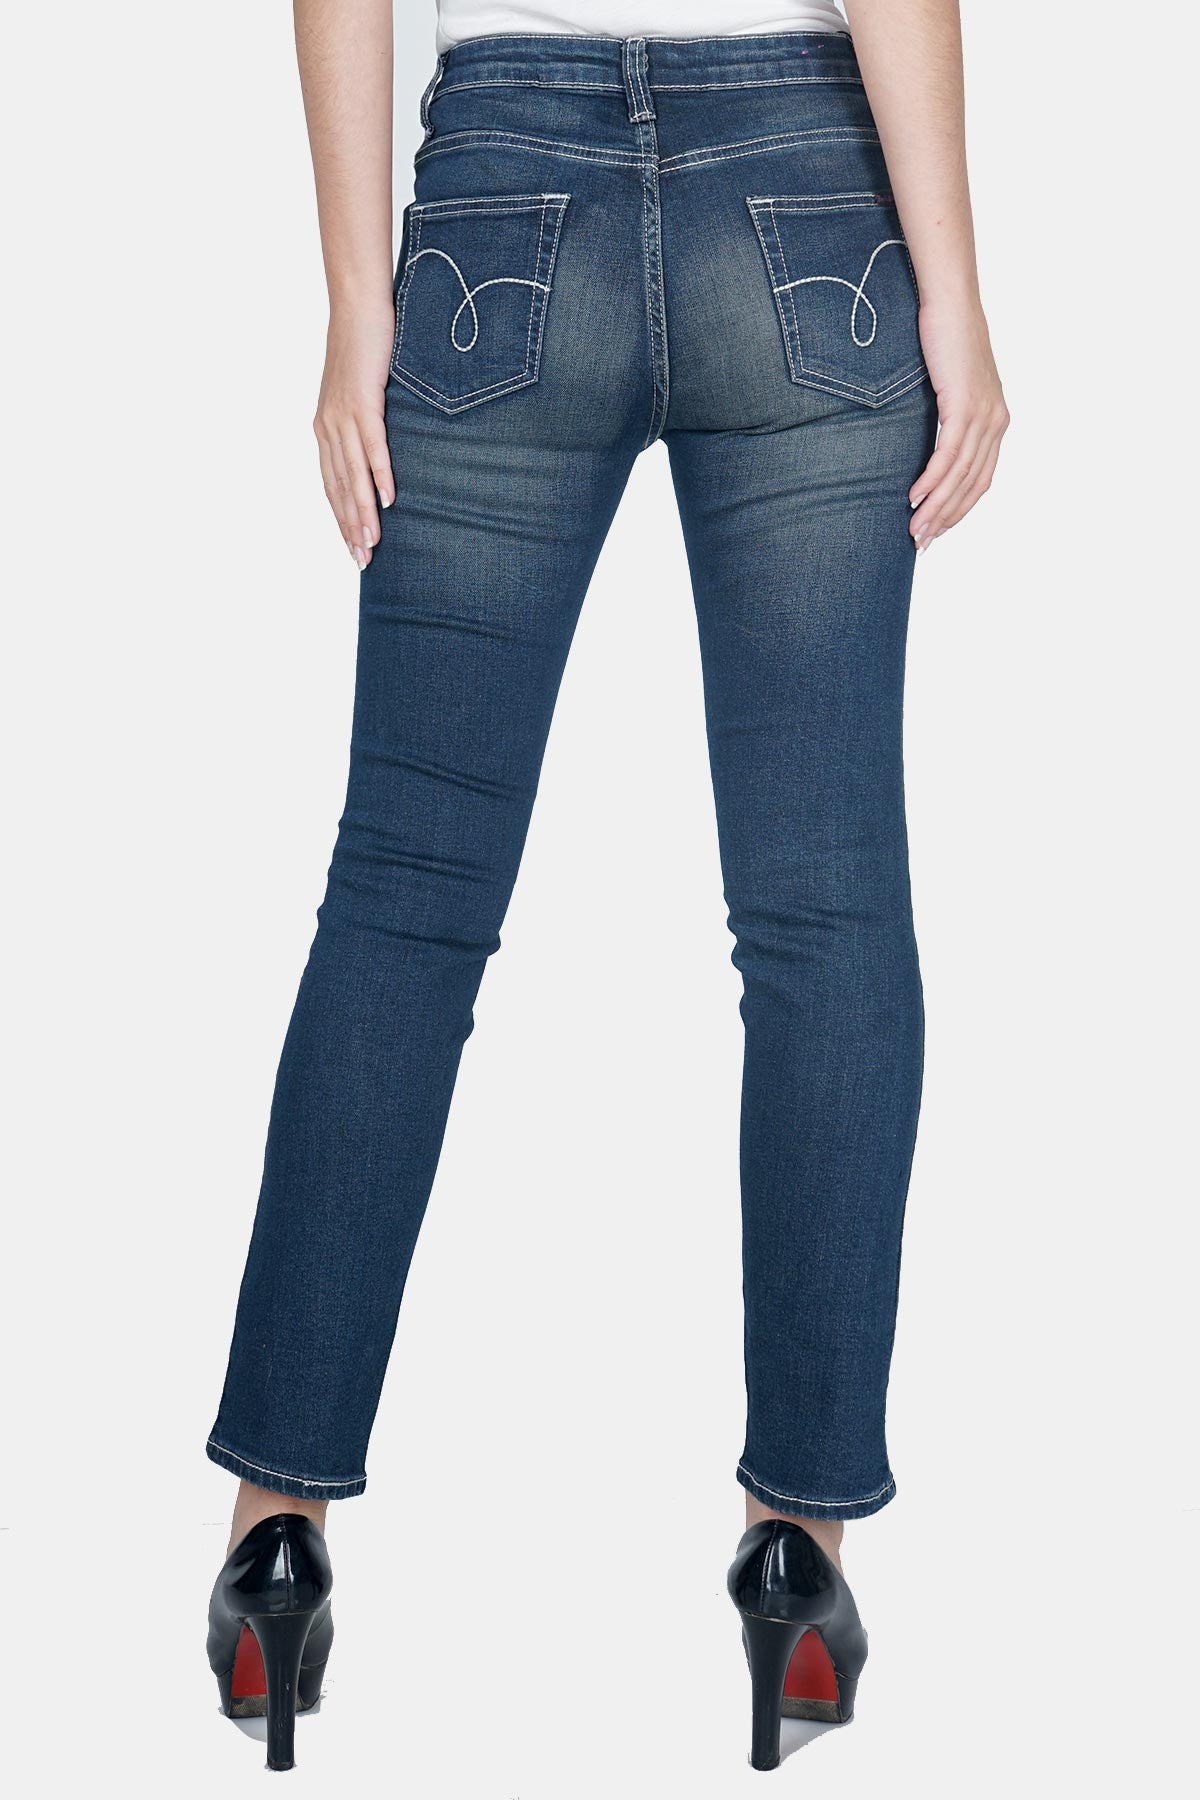 Jeans Handmade Straight 03 Medium Blue